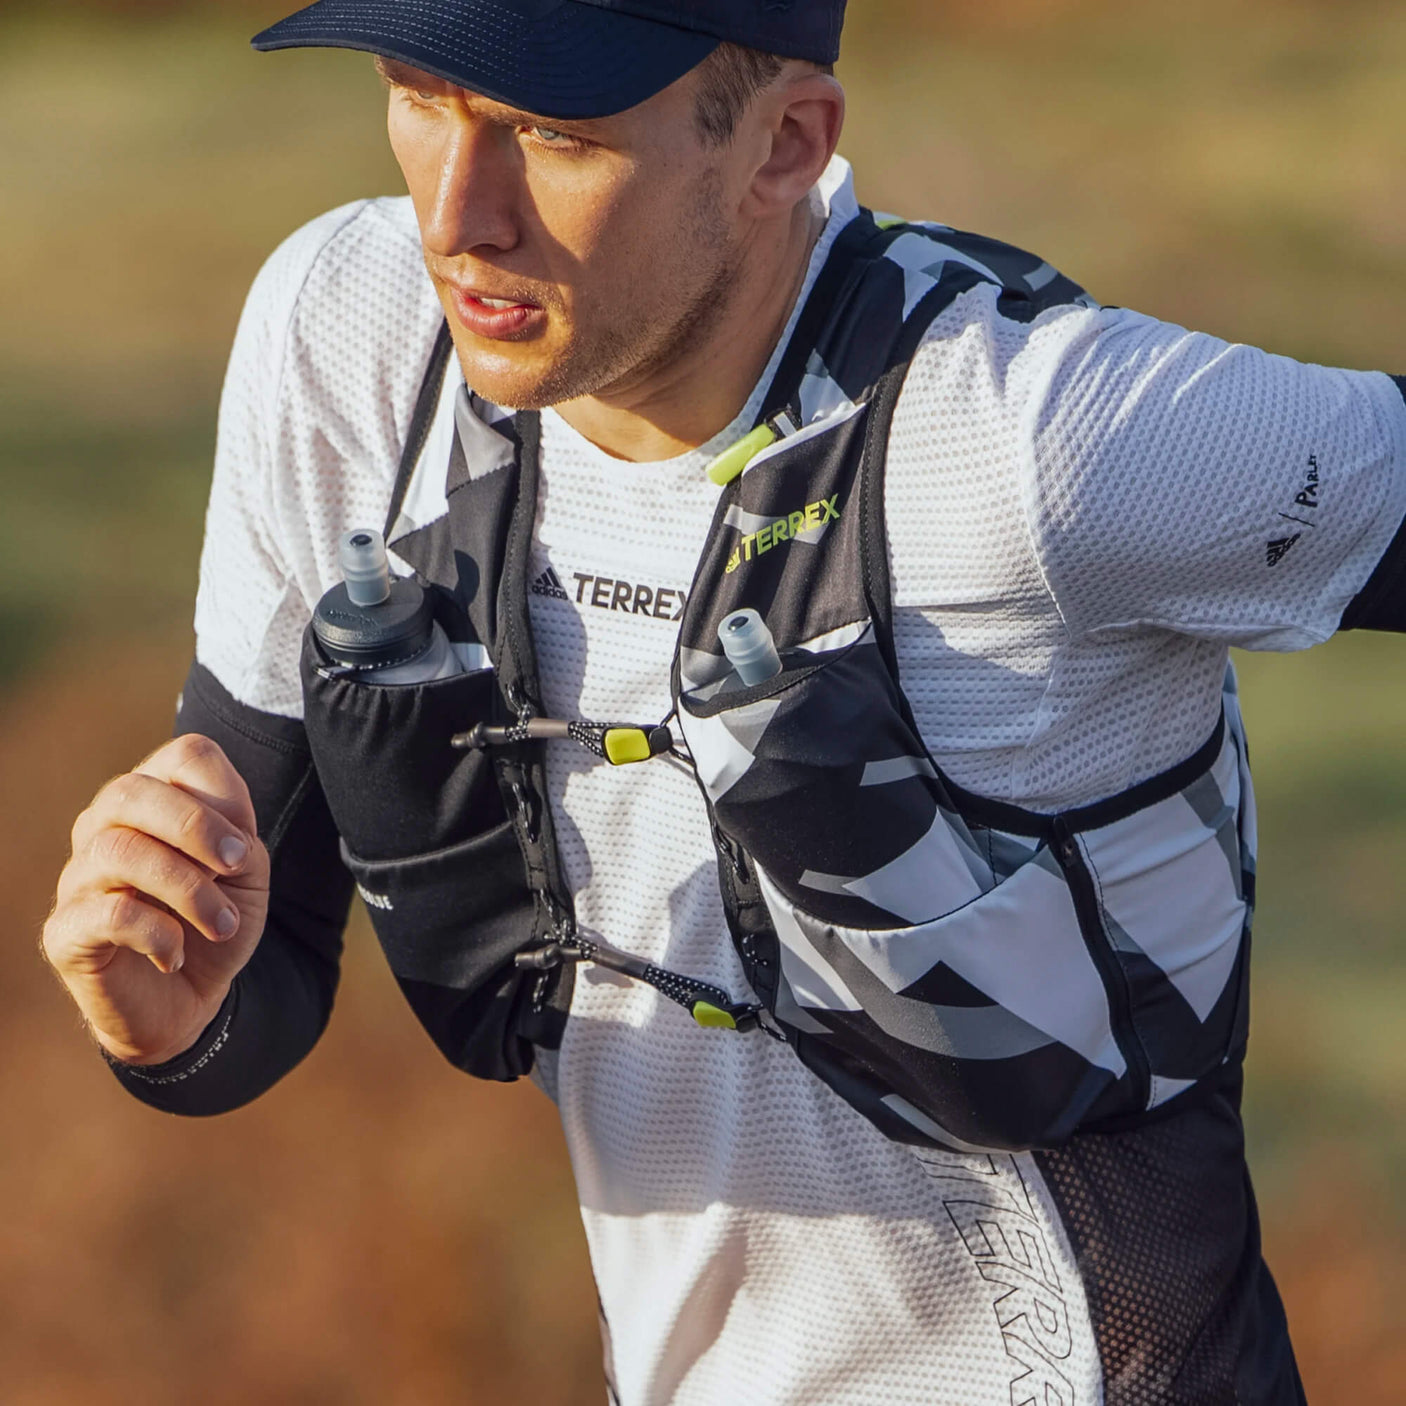 Gilet adidas Terrex Trail Running